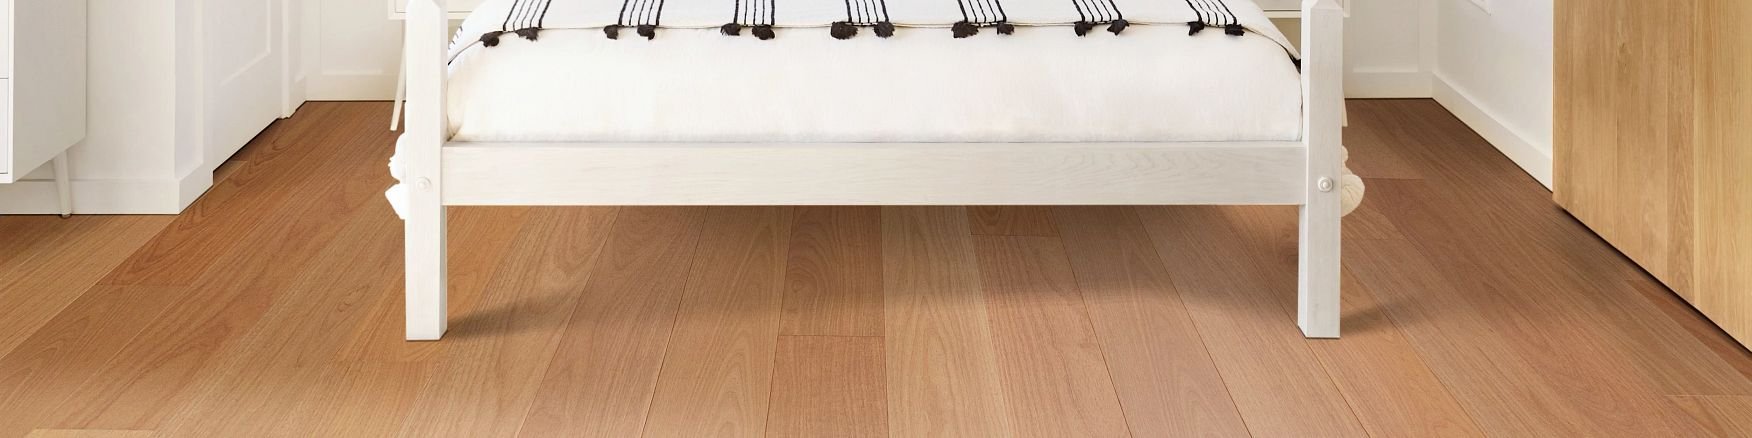 white bed on wood floor - Rickway Carpet in MN